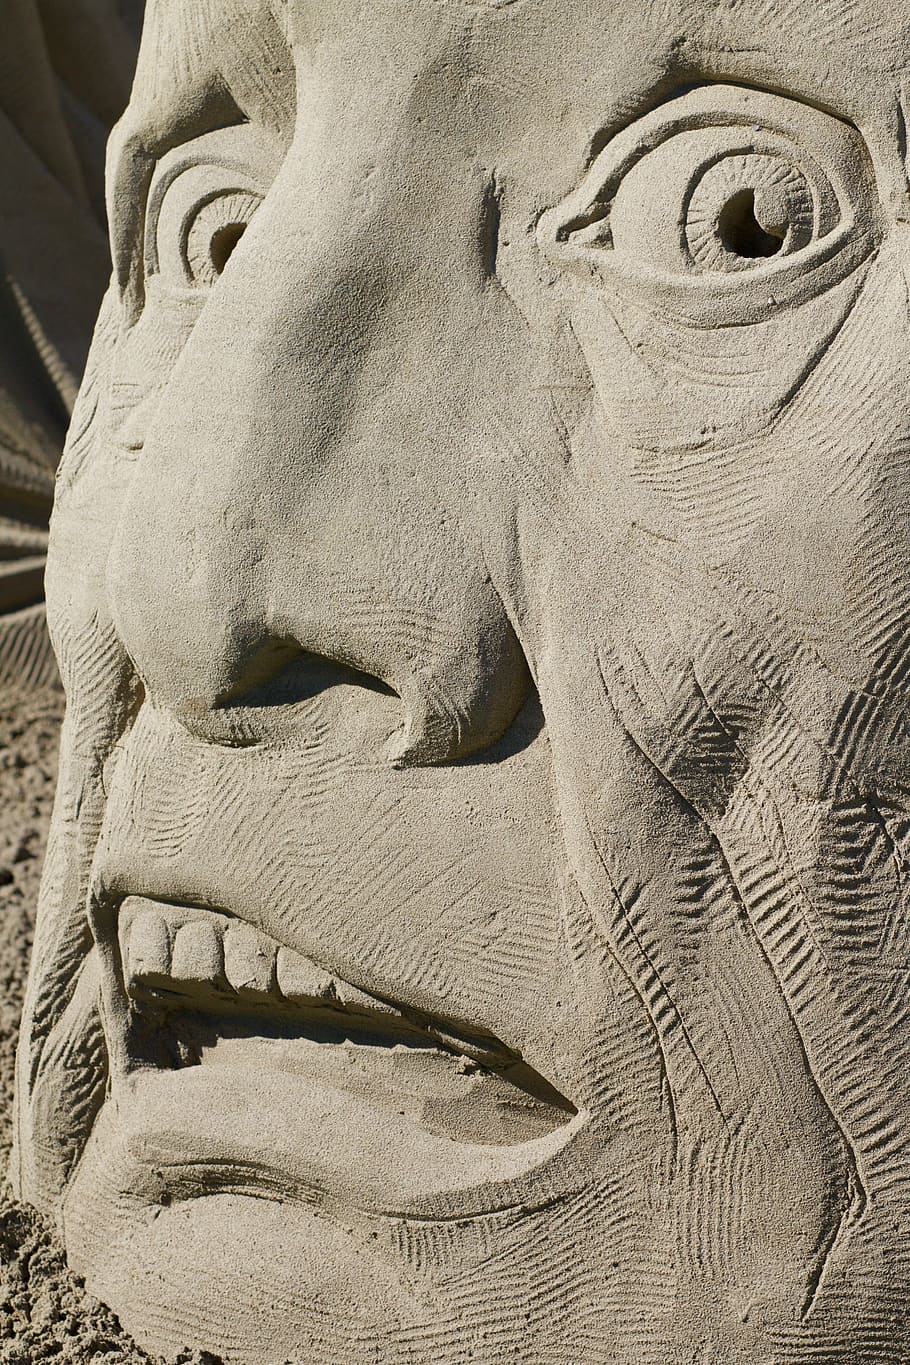 gris, hormigón, estatua de la cara, ojo, nariz, boca, cara, miedo, horror, escultura de arena